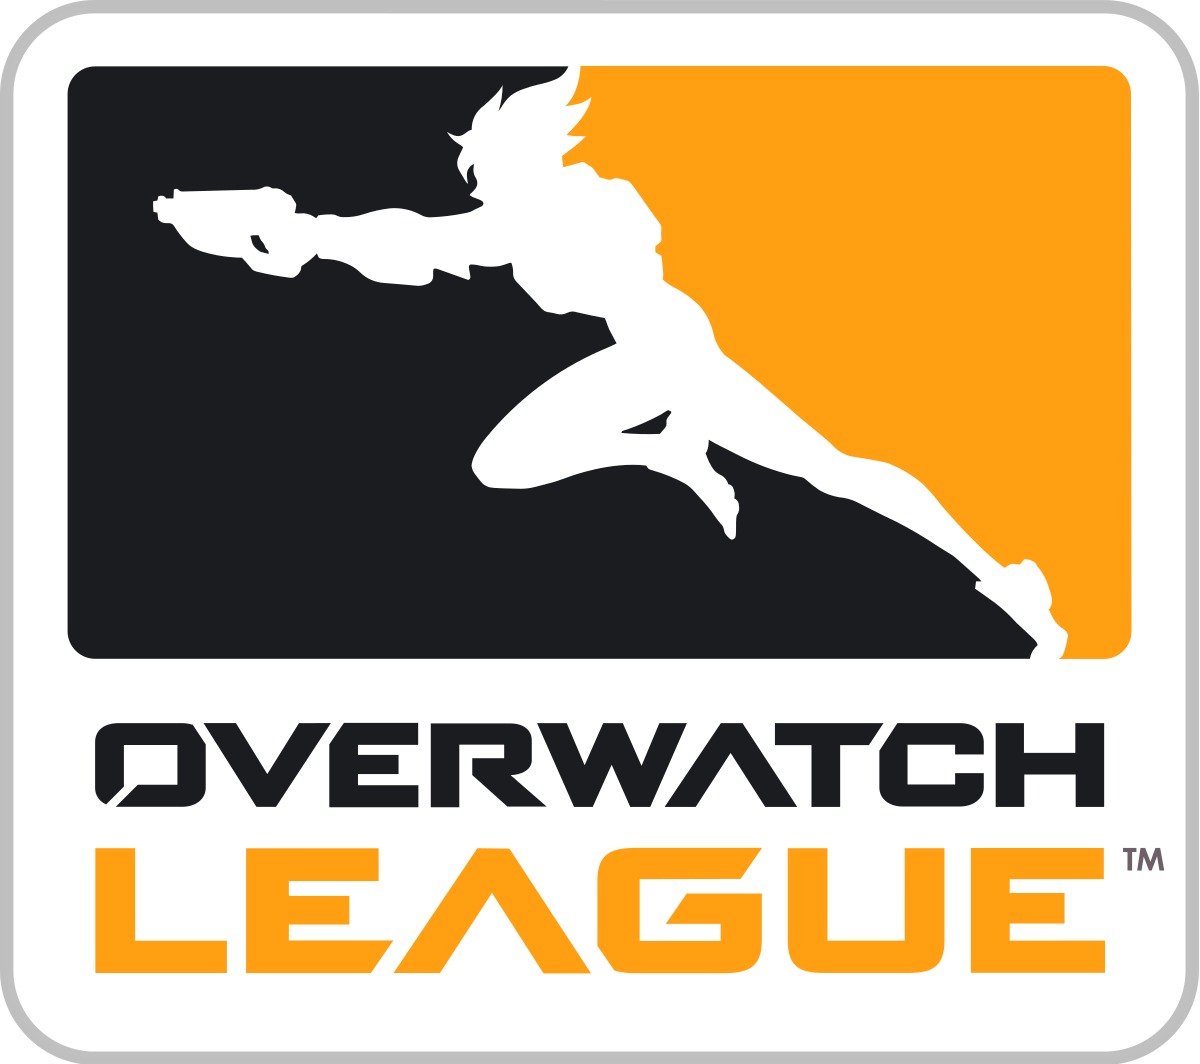 Overwatch league logo